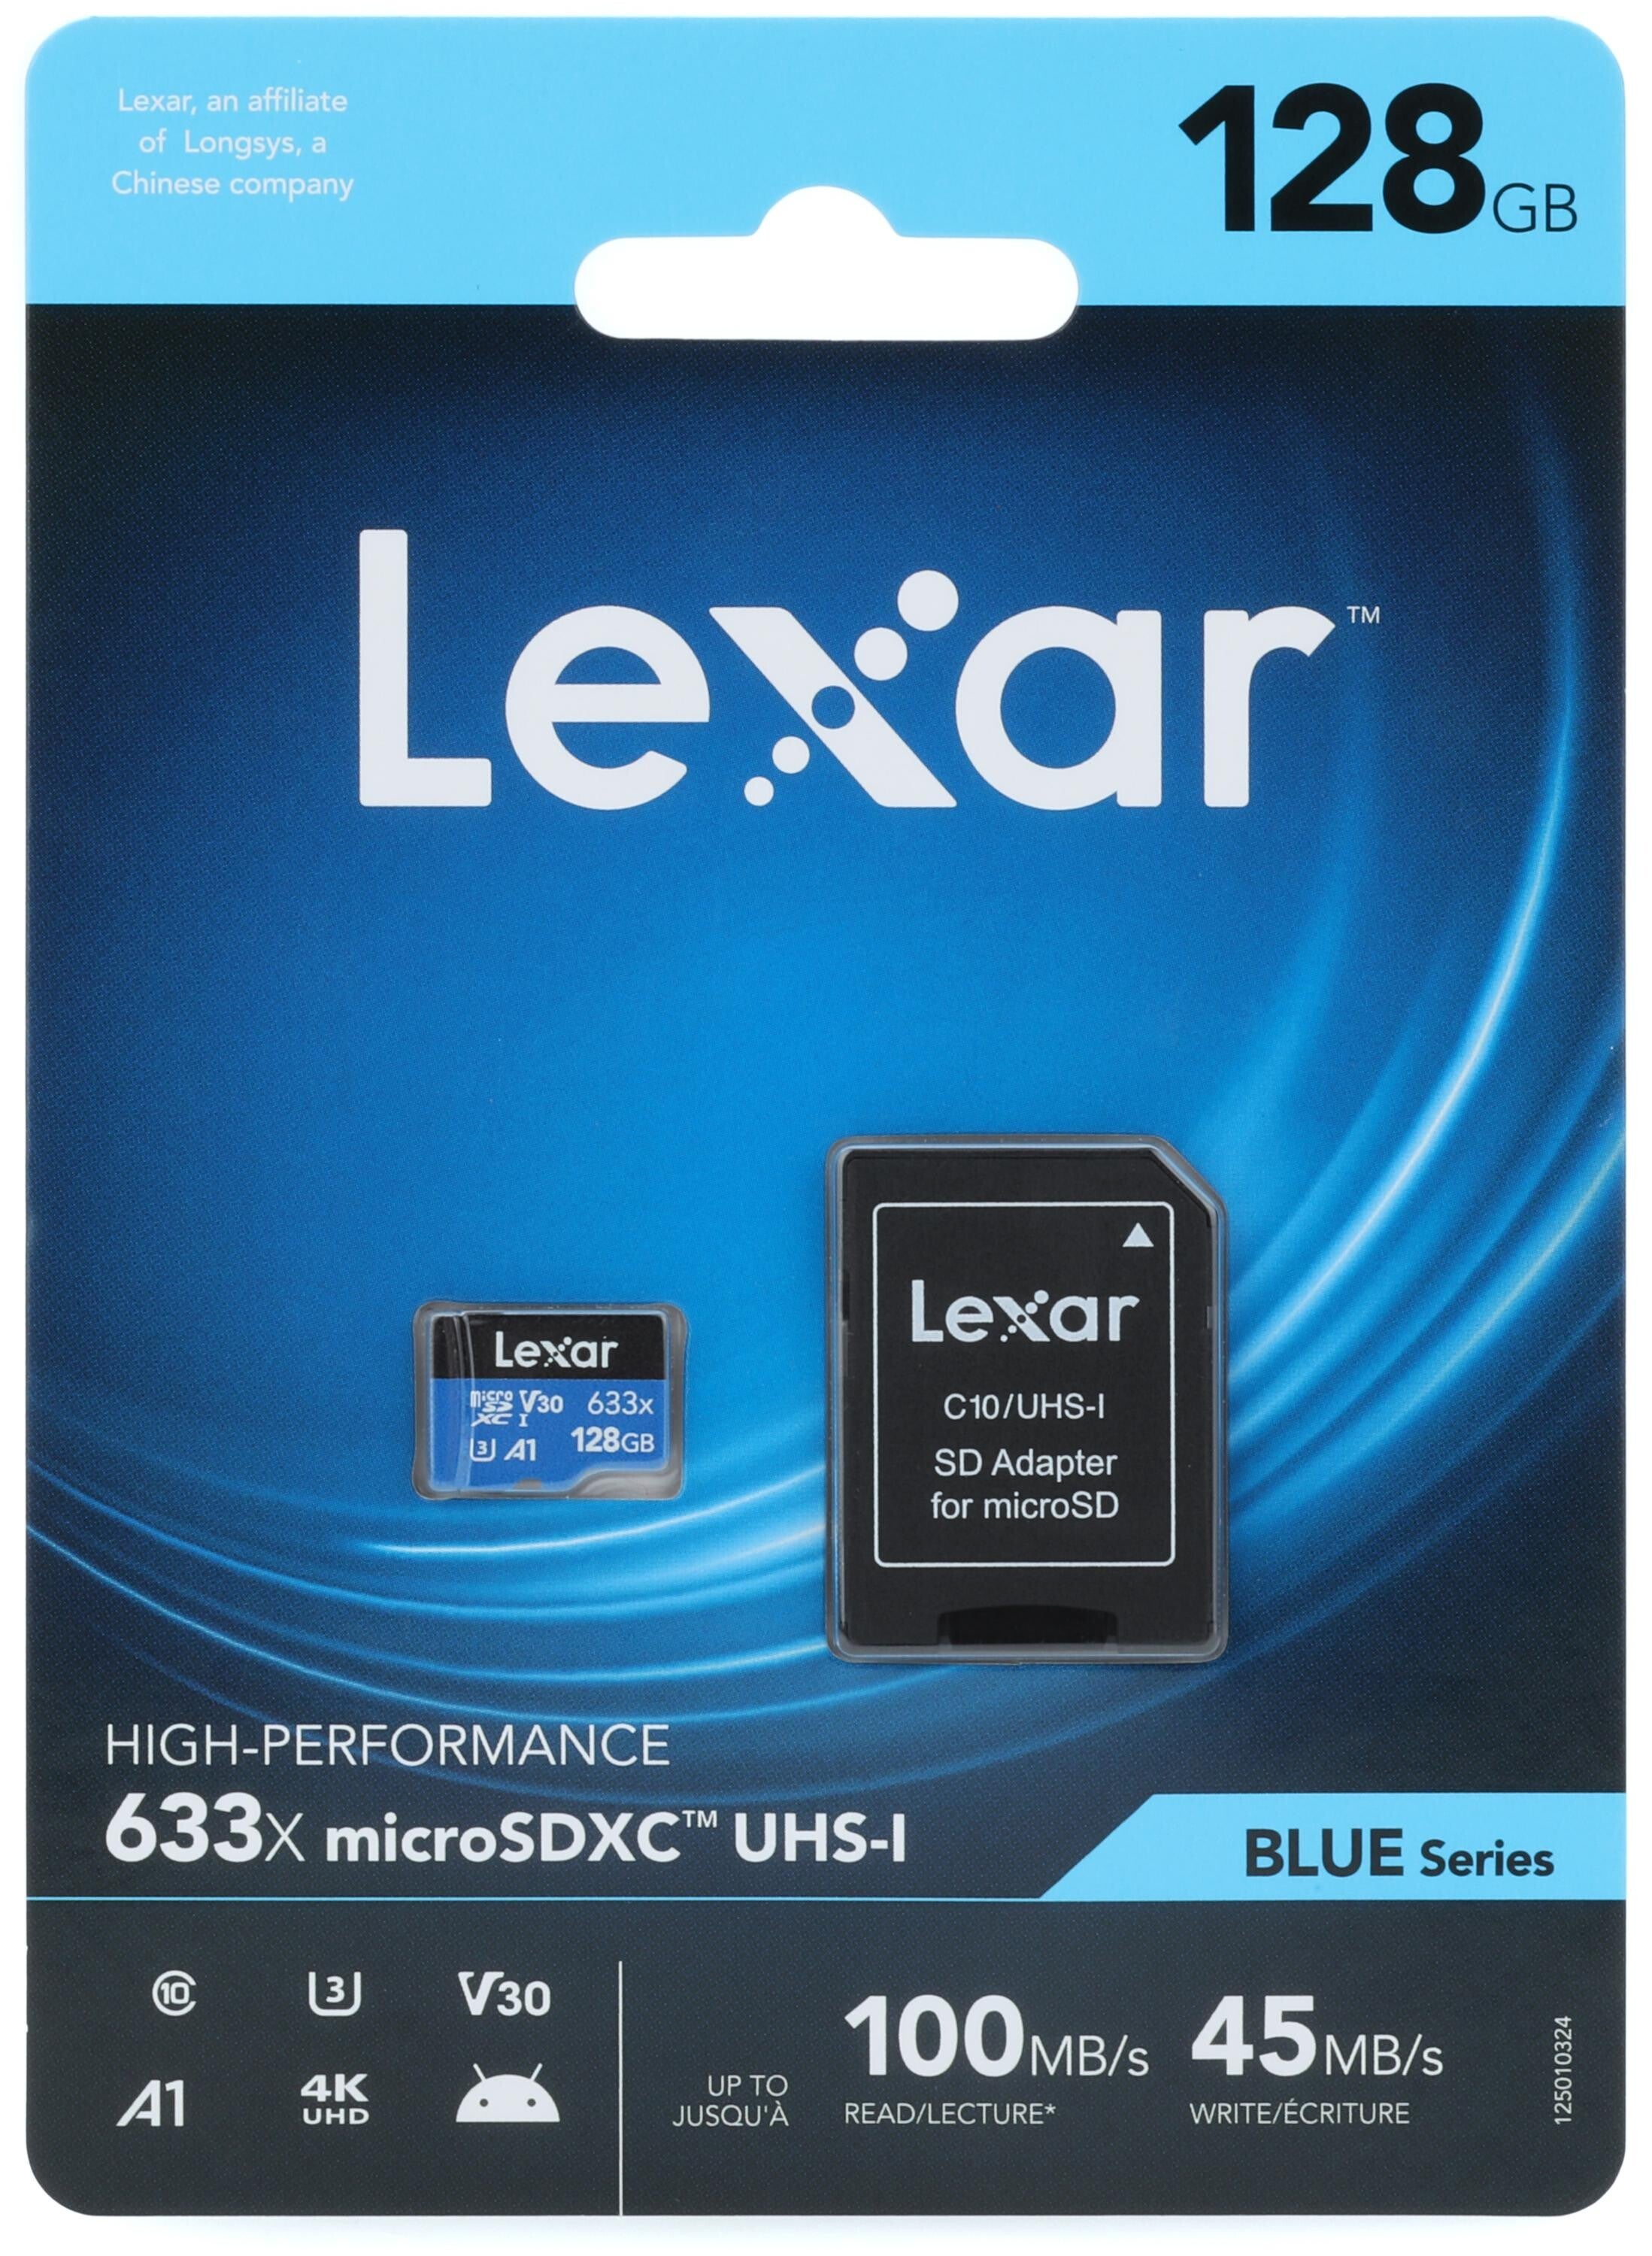 Bundled Item: Lexar High-performance MicroSDXC Card - 128GB, Class 10, UHS-I